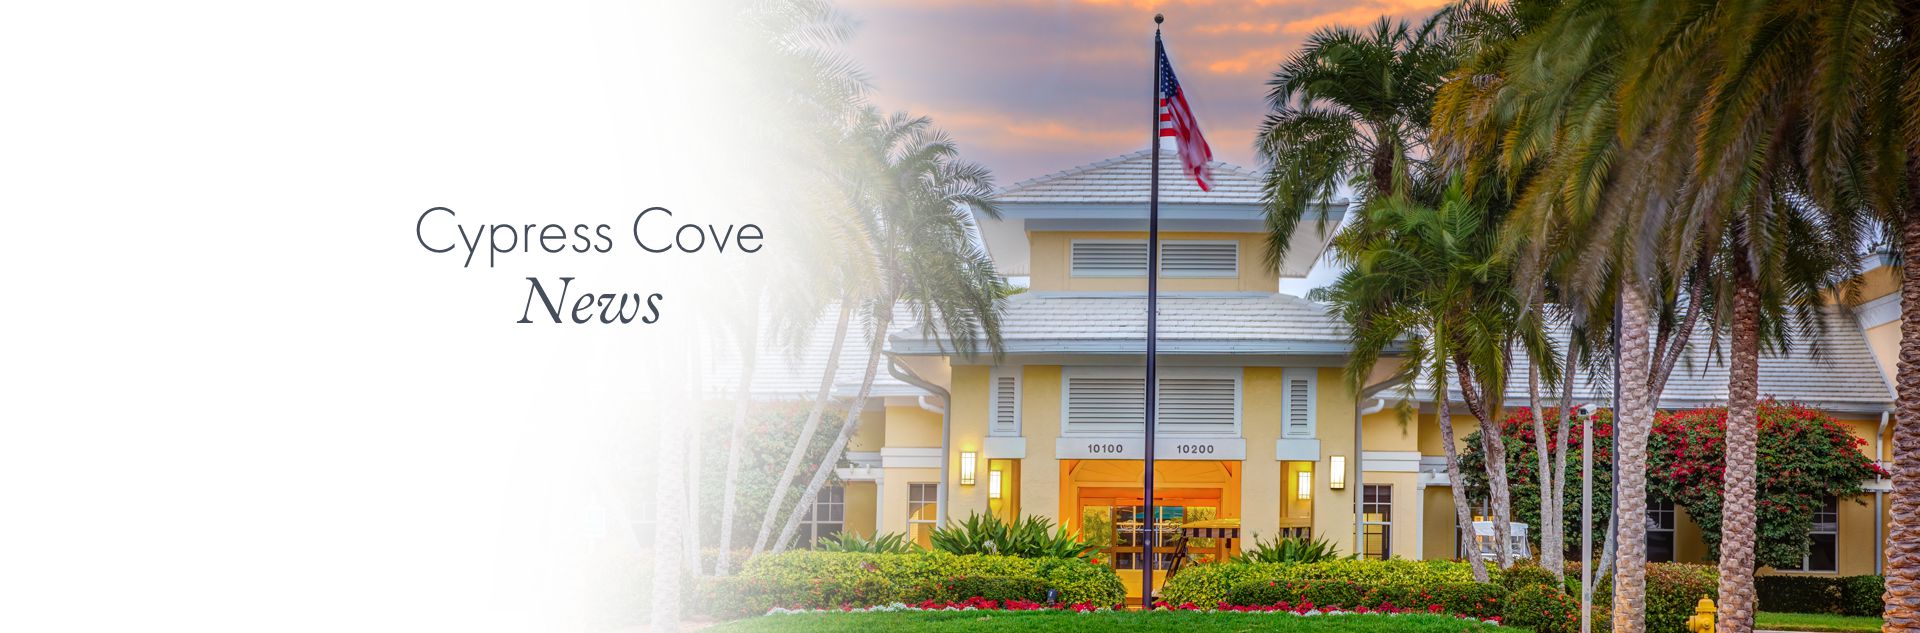 Cypress Cove News